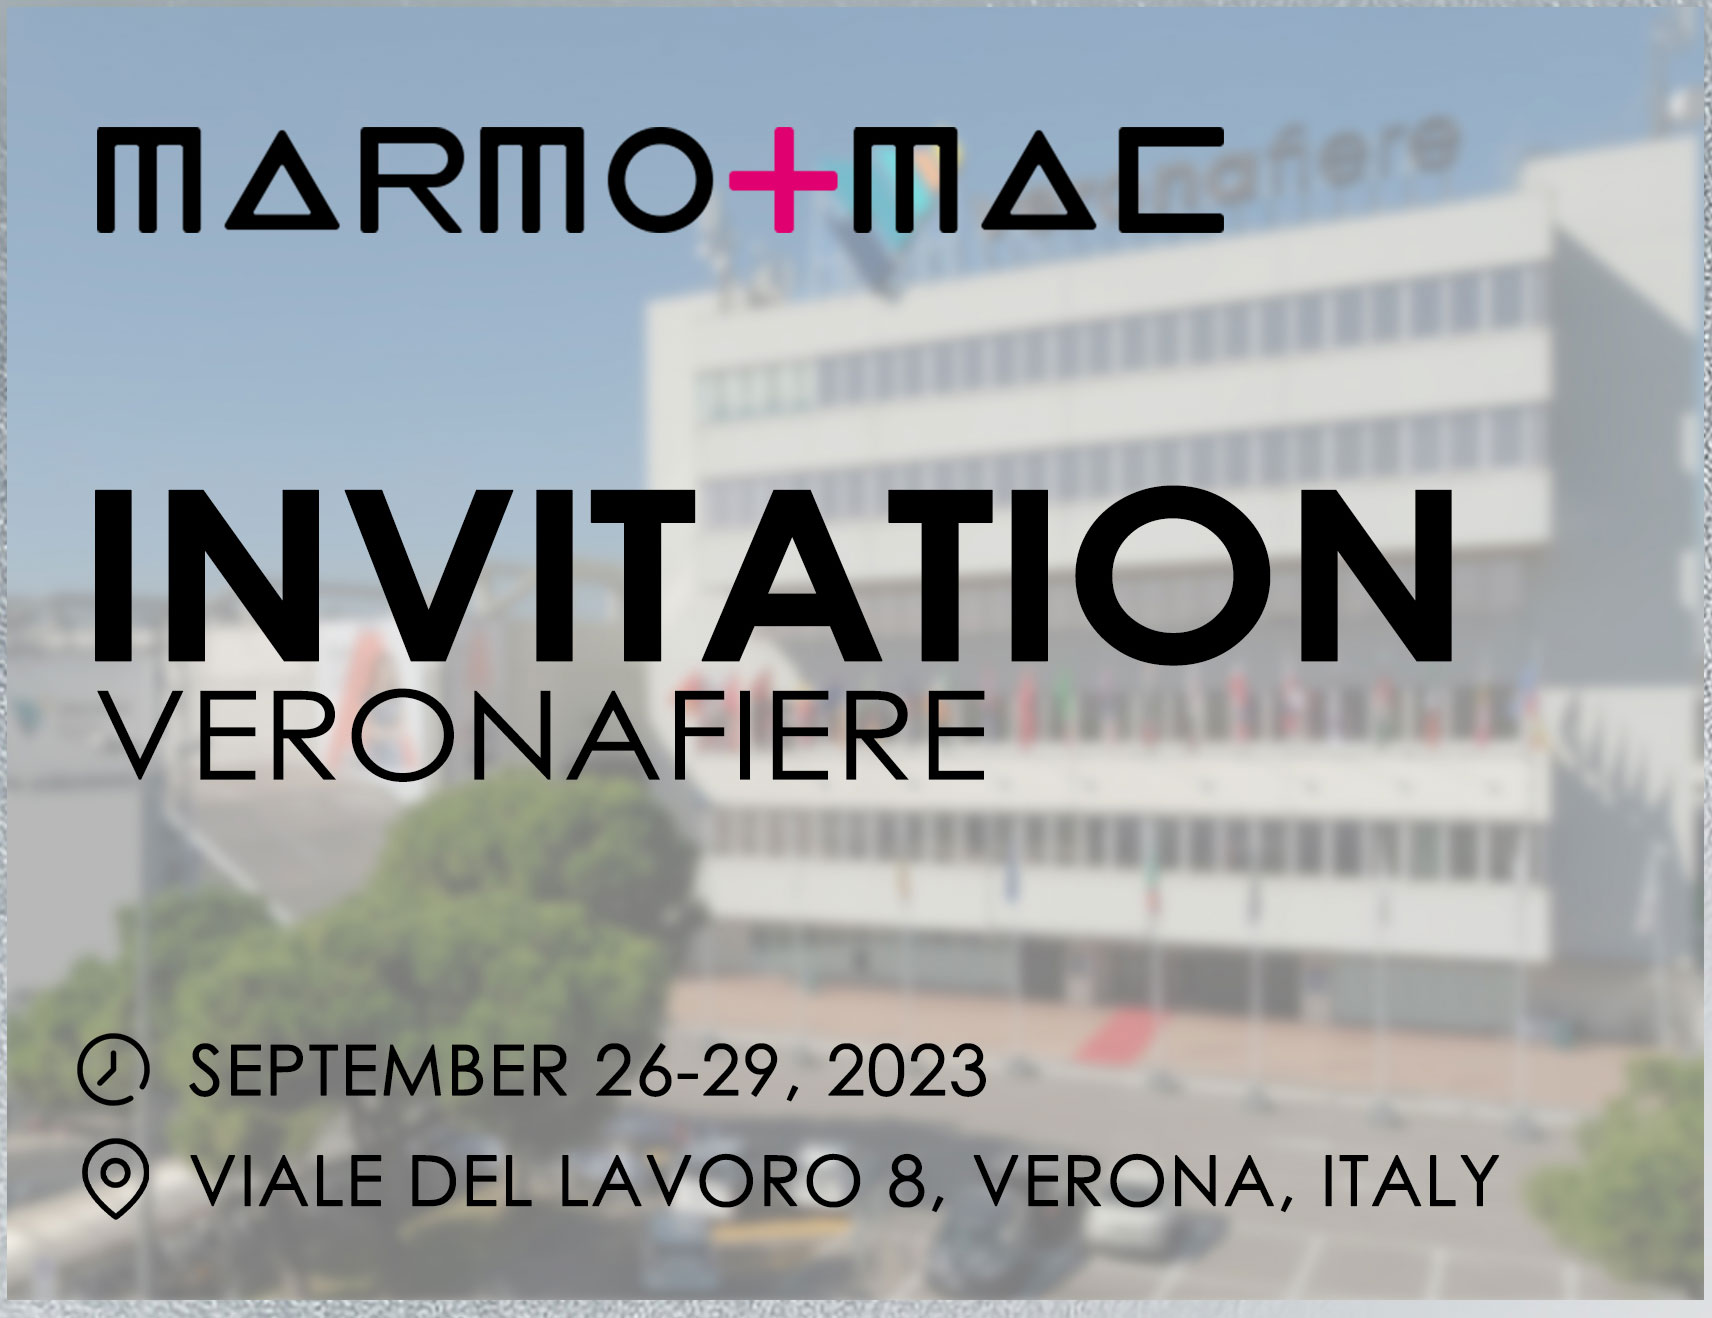 2023 Italian exhibition invitation